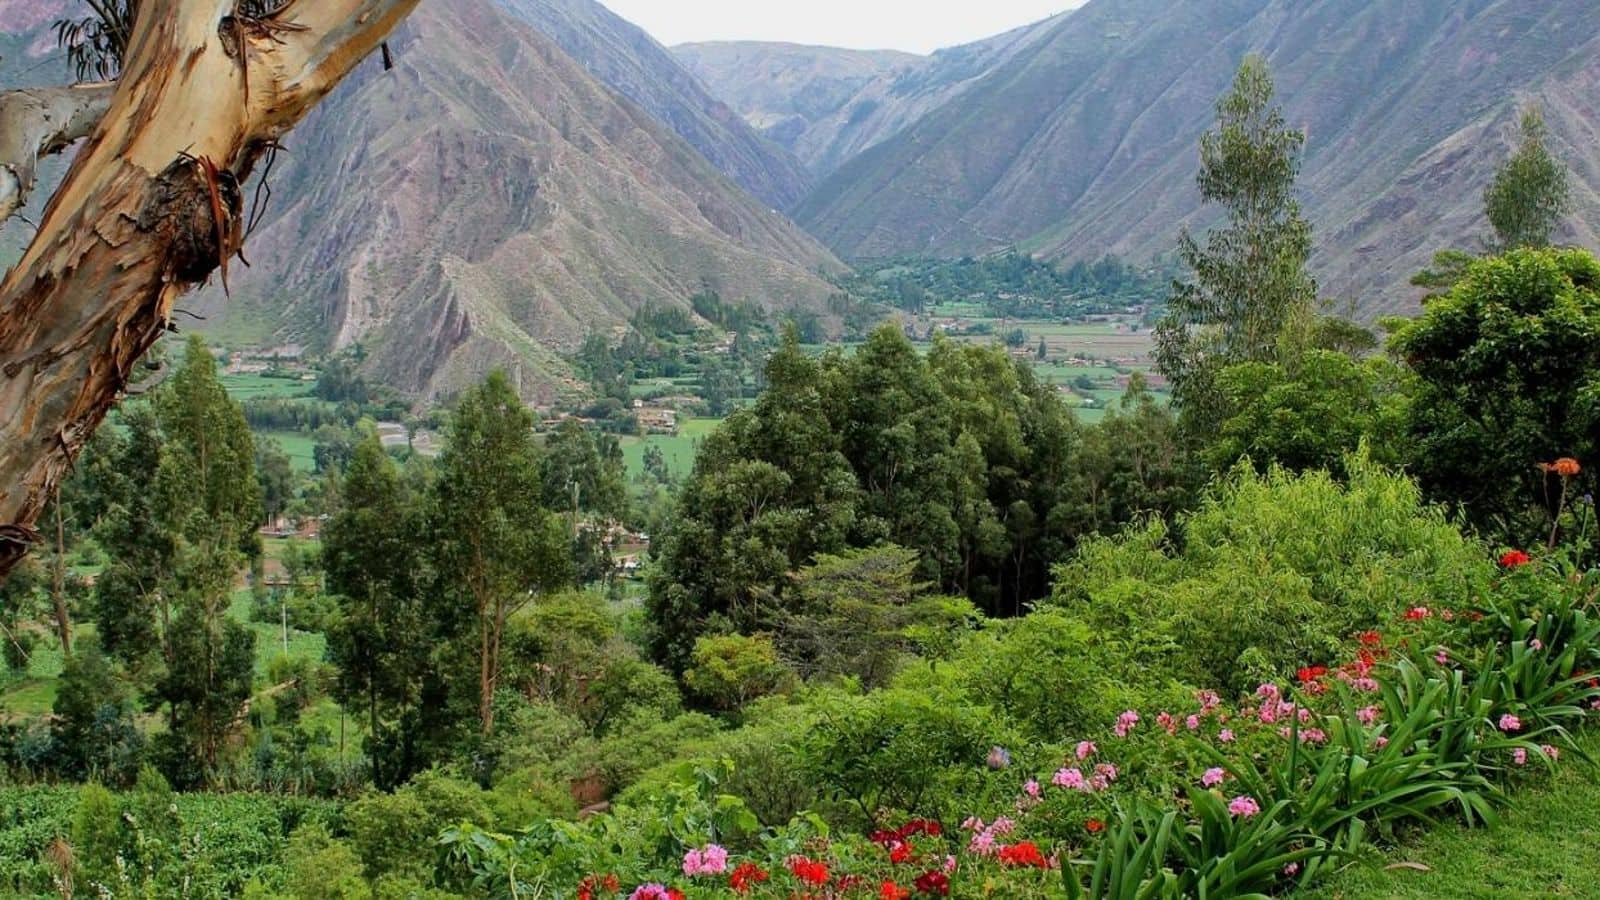 Trek the Sacred Valley, Peru's ancient paths